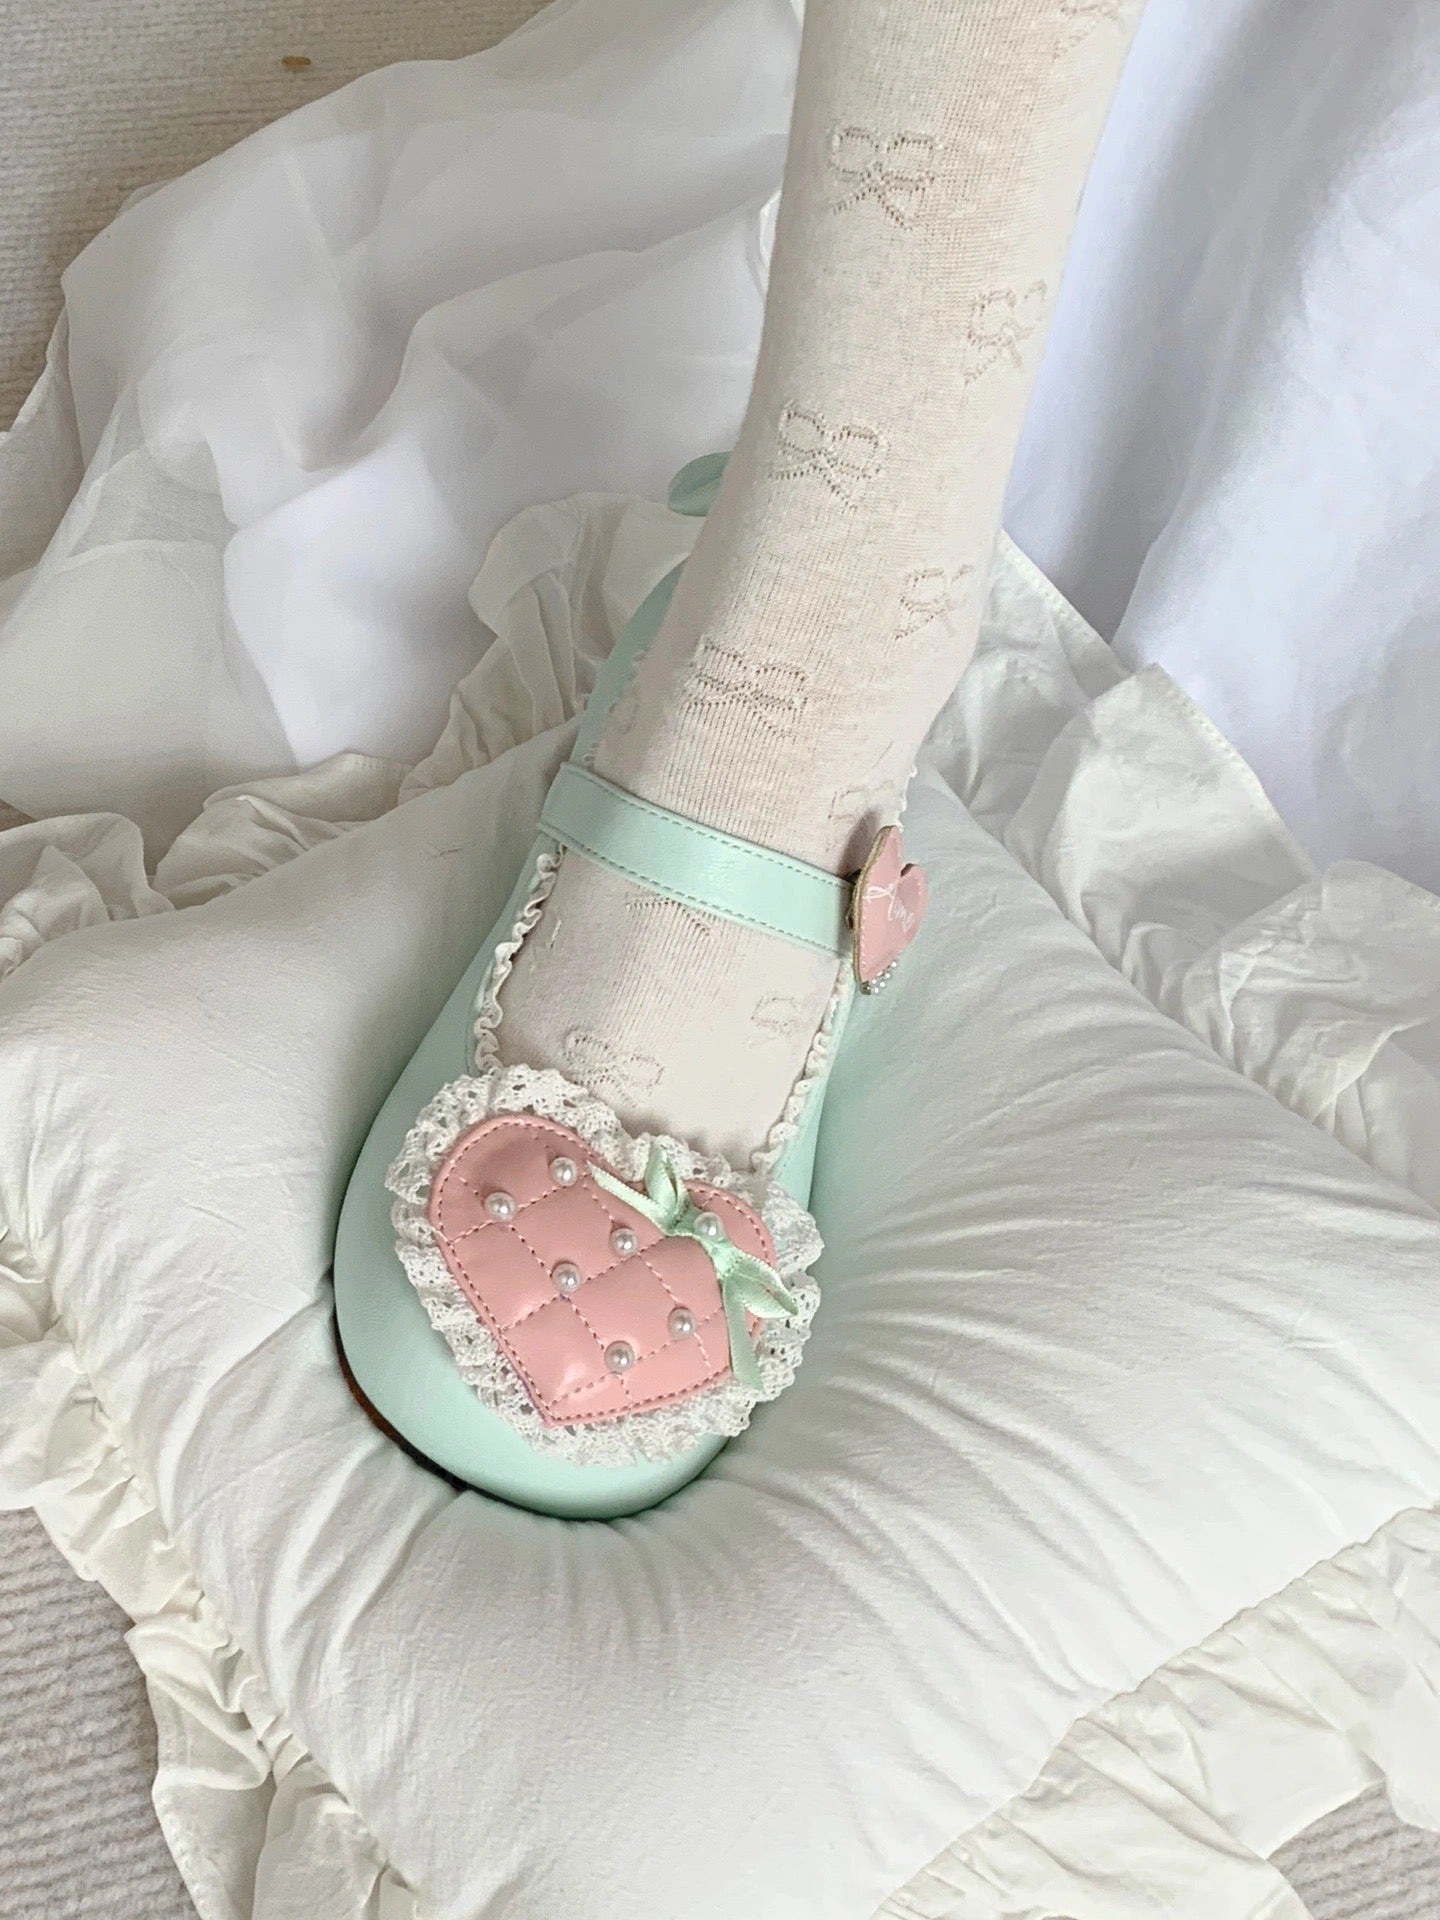 ♡ Little Cuddle ♡ - Low-Heel/Flat Shoes